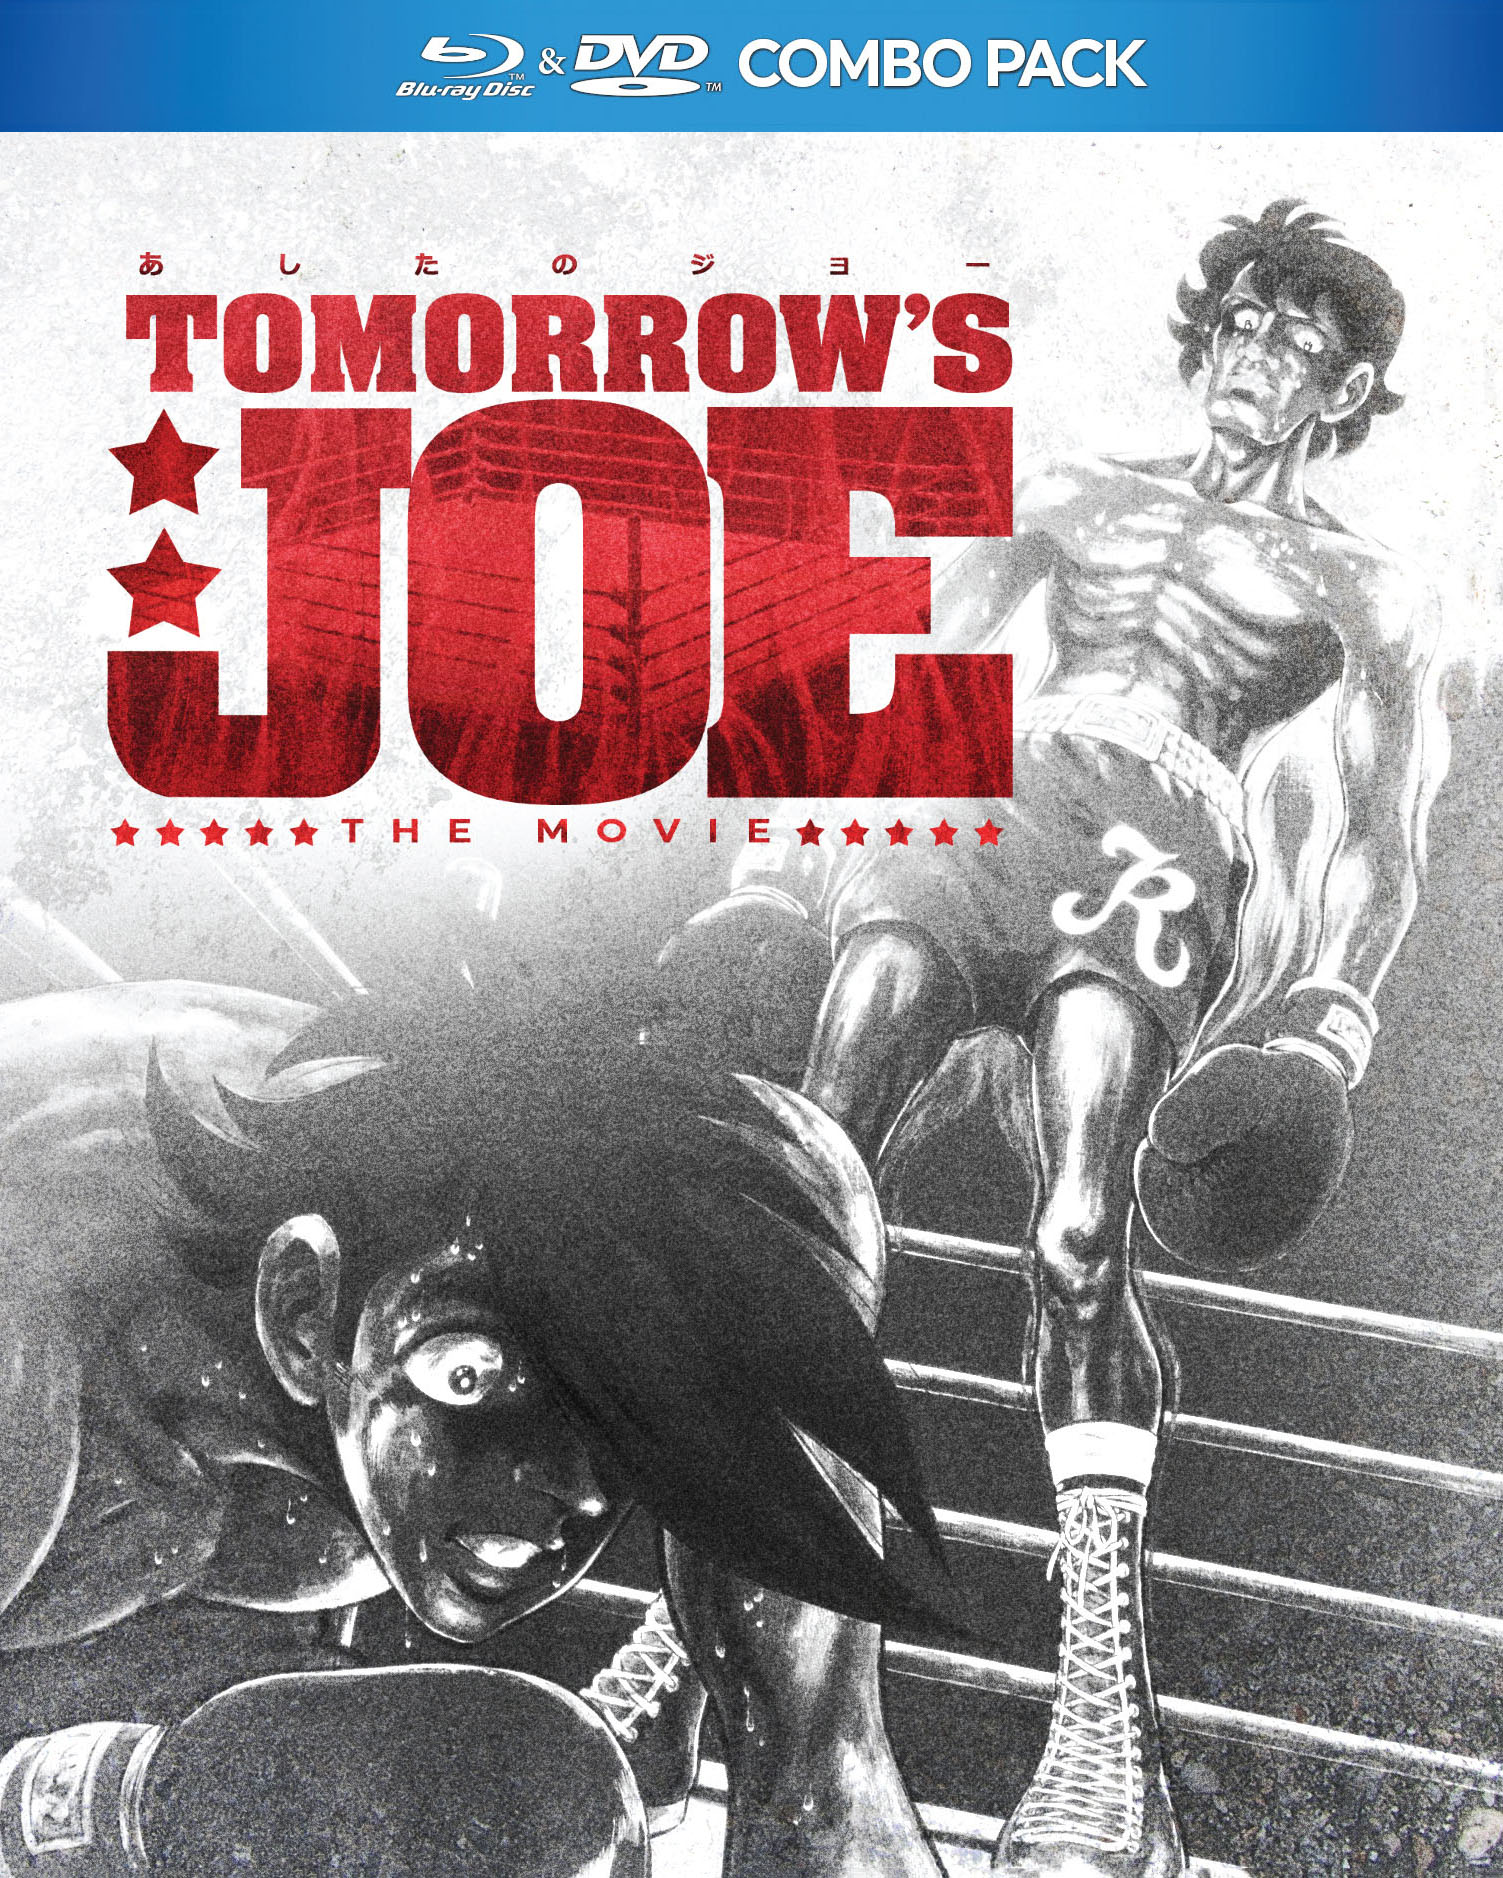 Vintage Anime Yabuki Joe Boxing Hajime No Ippo Shirt